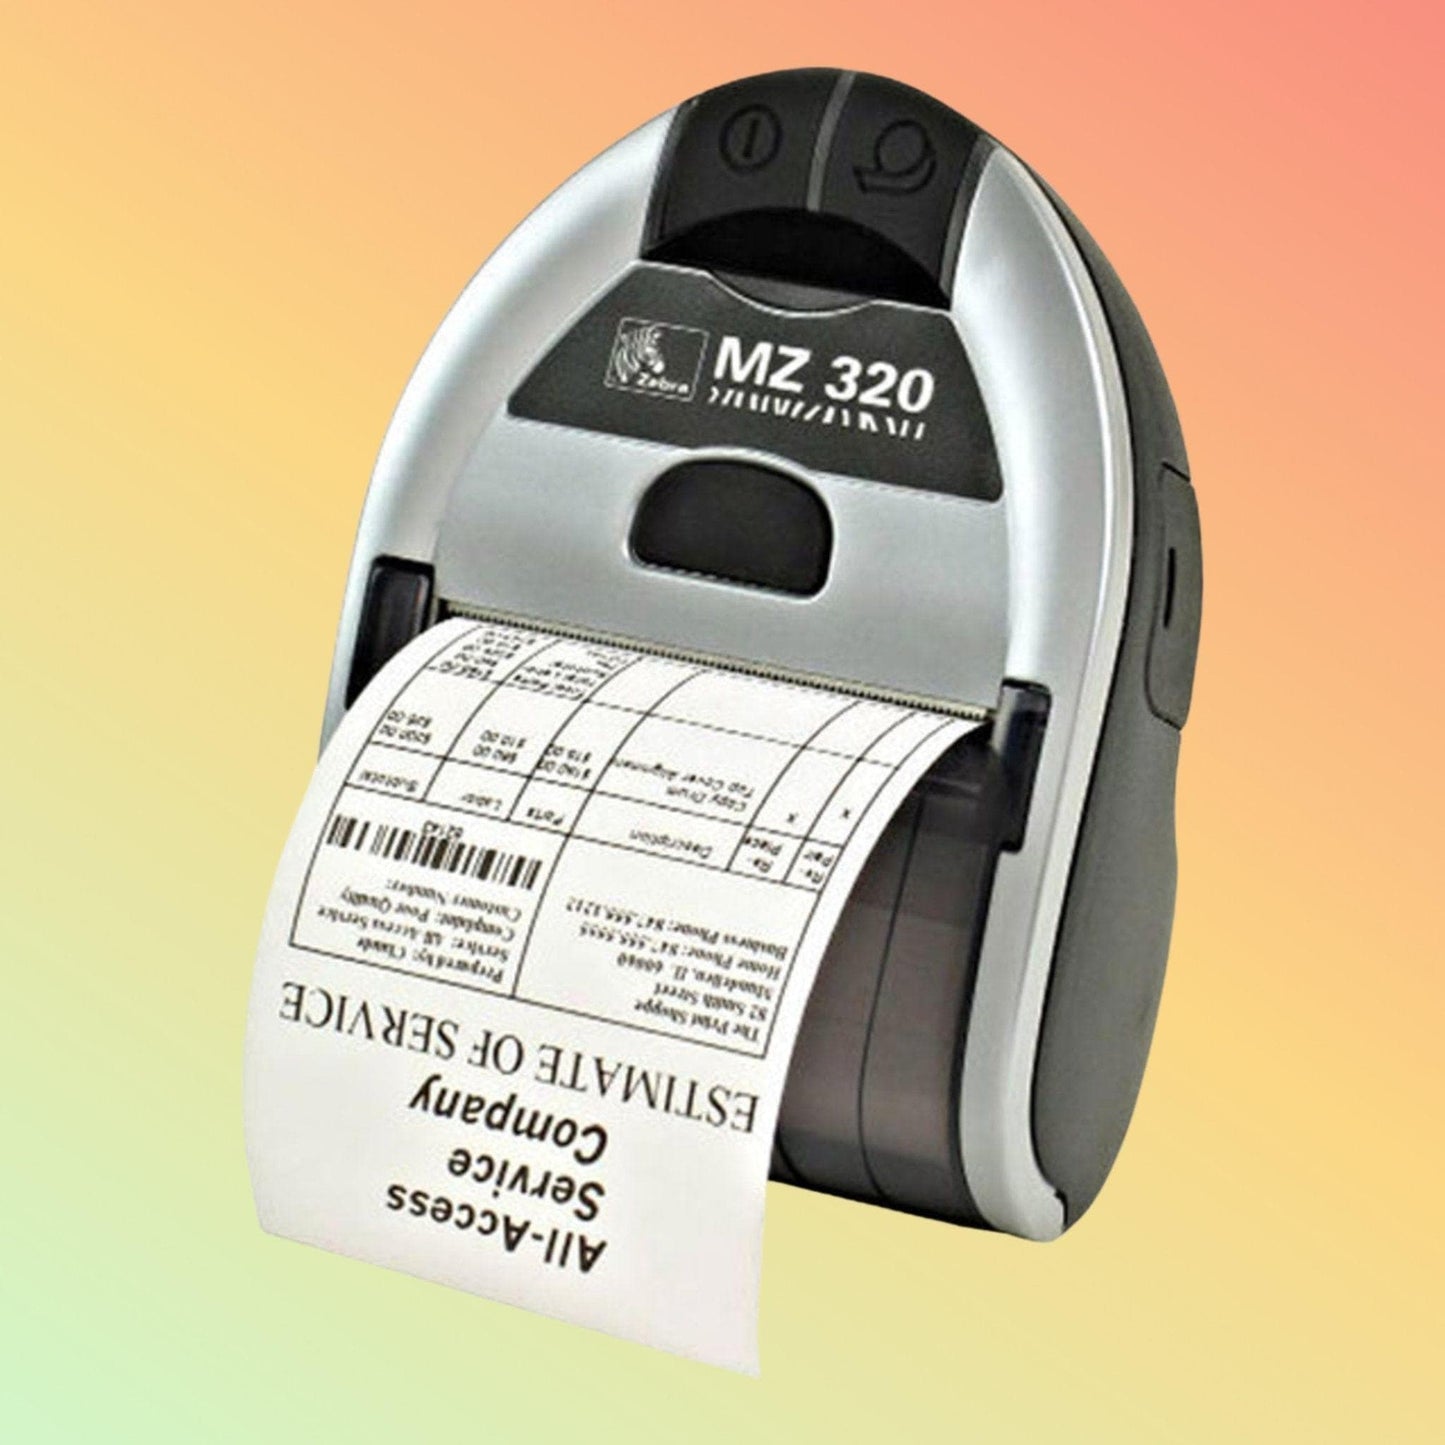 Mobile printer - Zebra iMZ-320 - Neotech